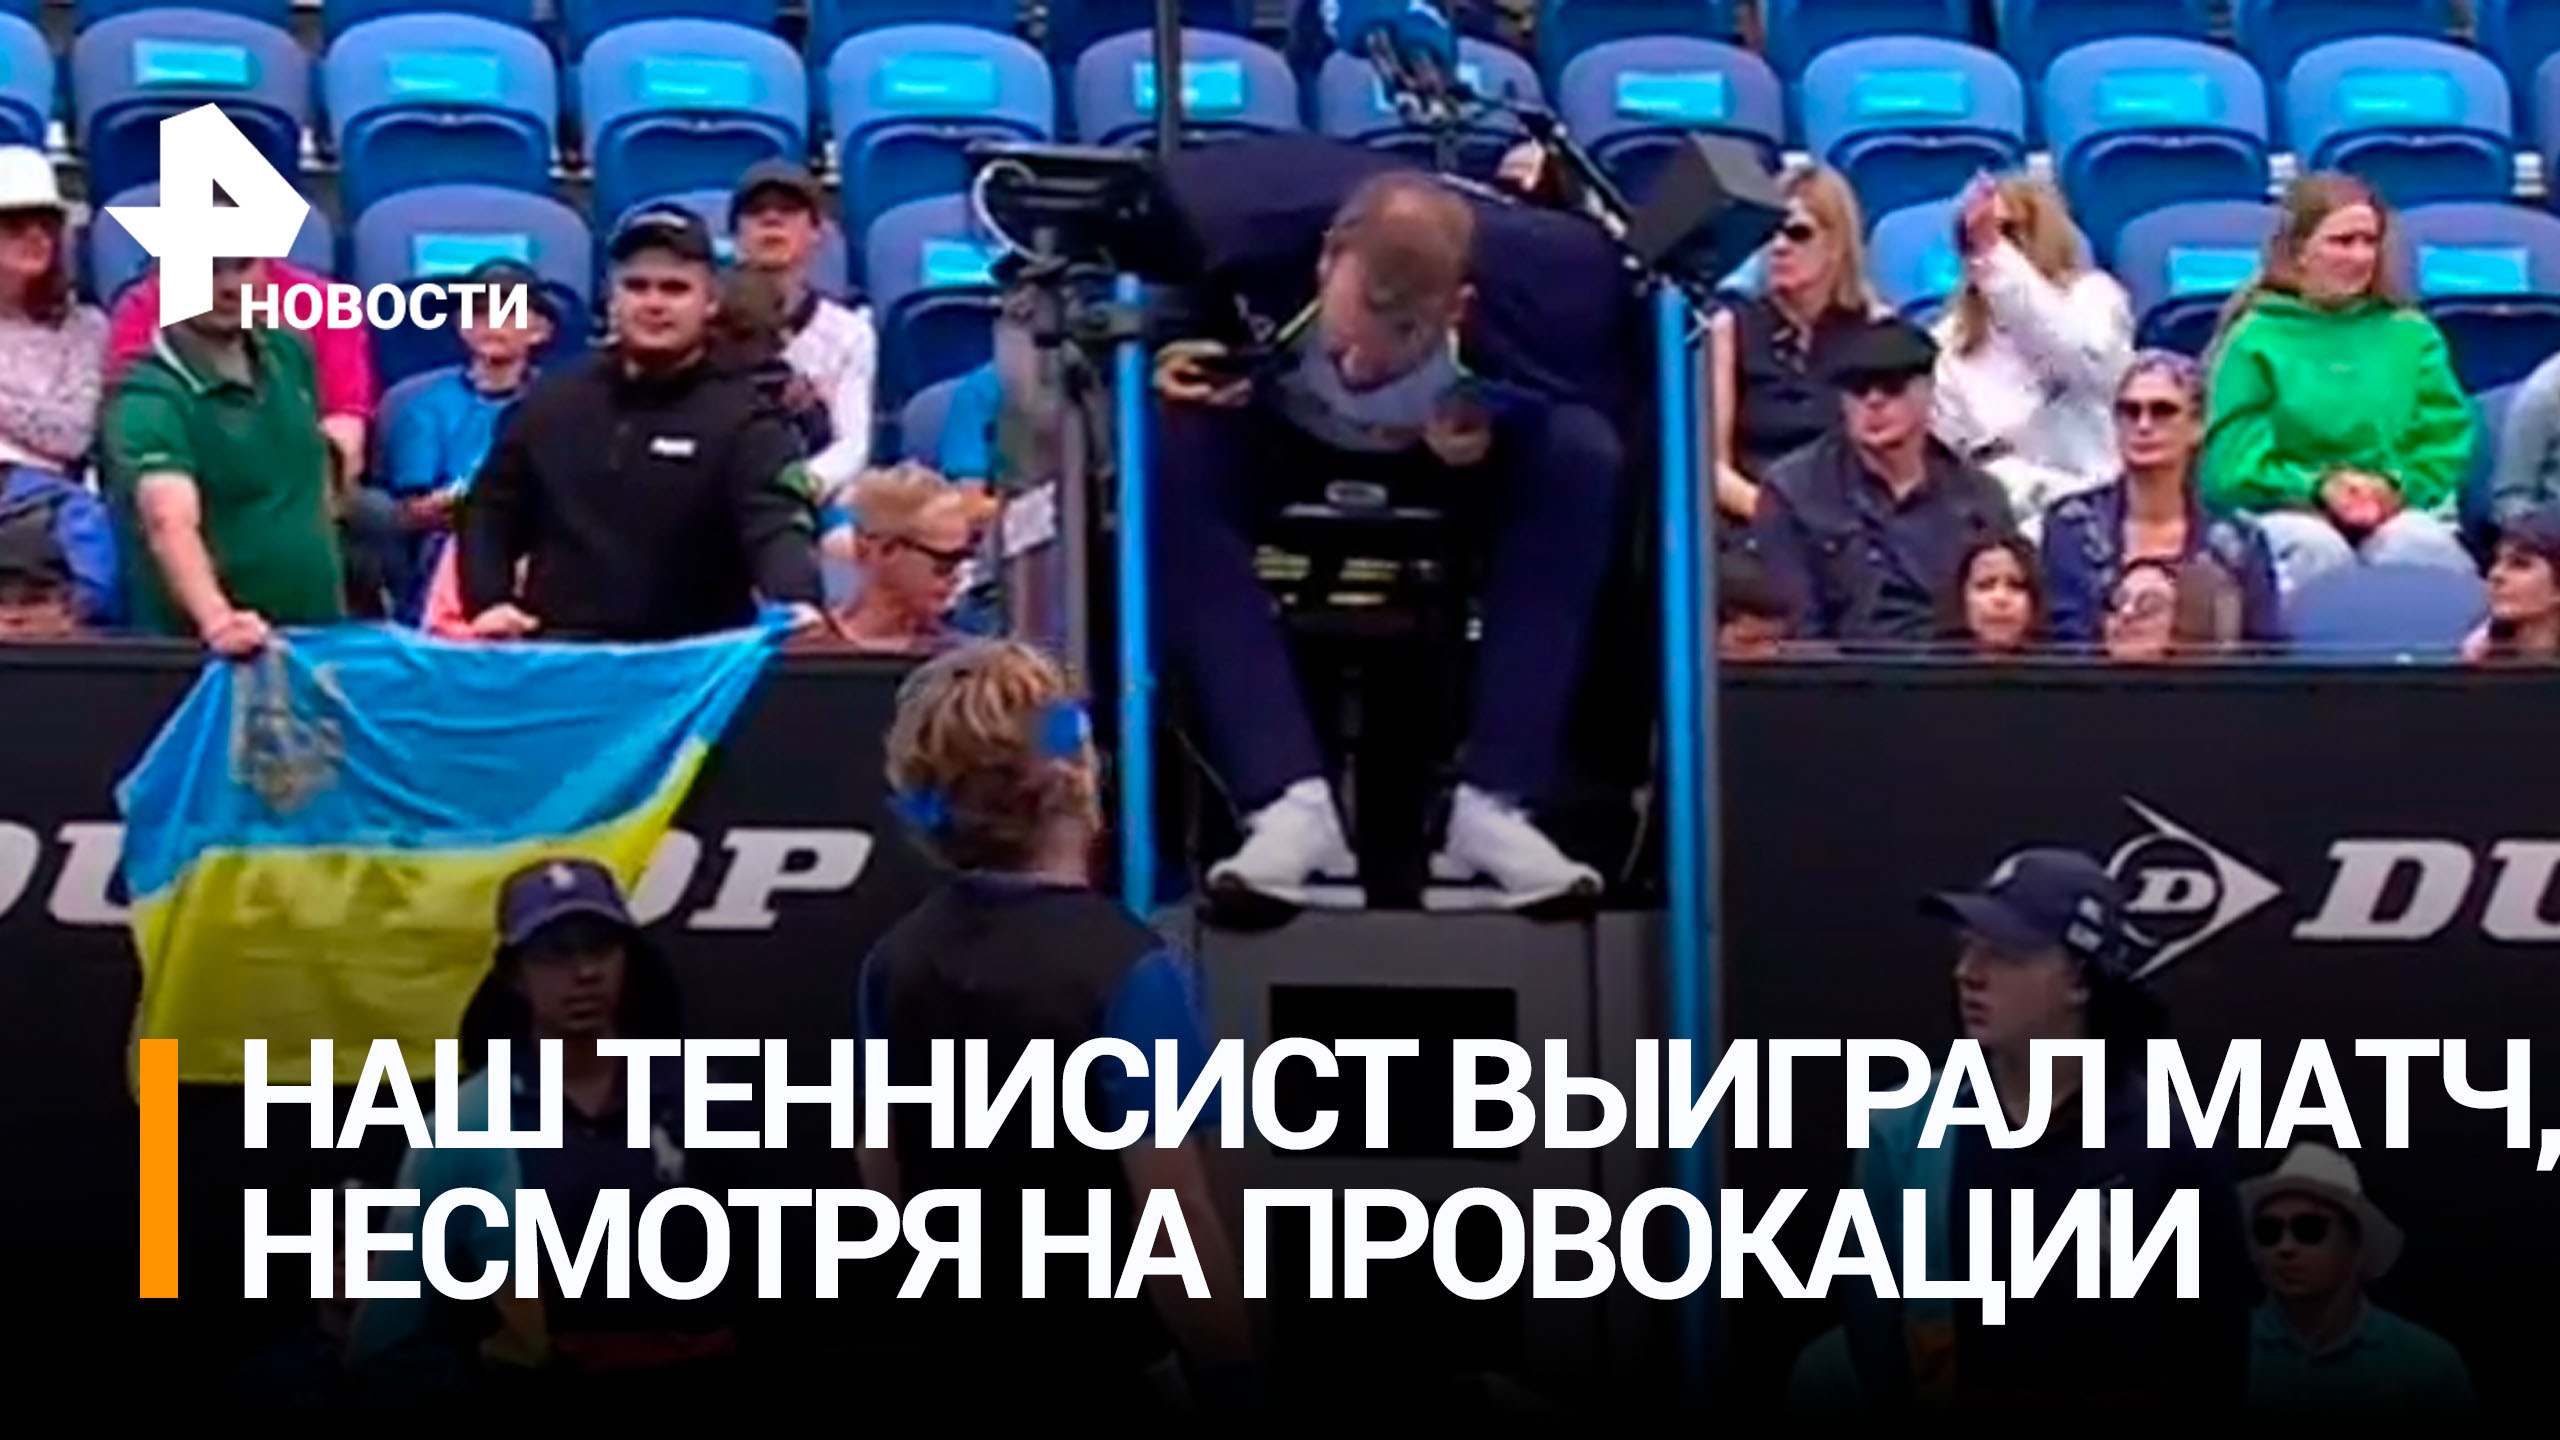 Люди с флагом Украины оскорбляли теннисиста Рублева на Australian Open. Он выиграл / РЕН Новости